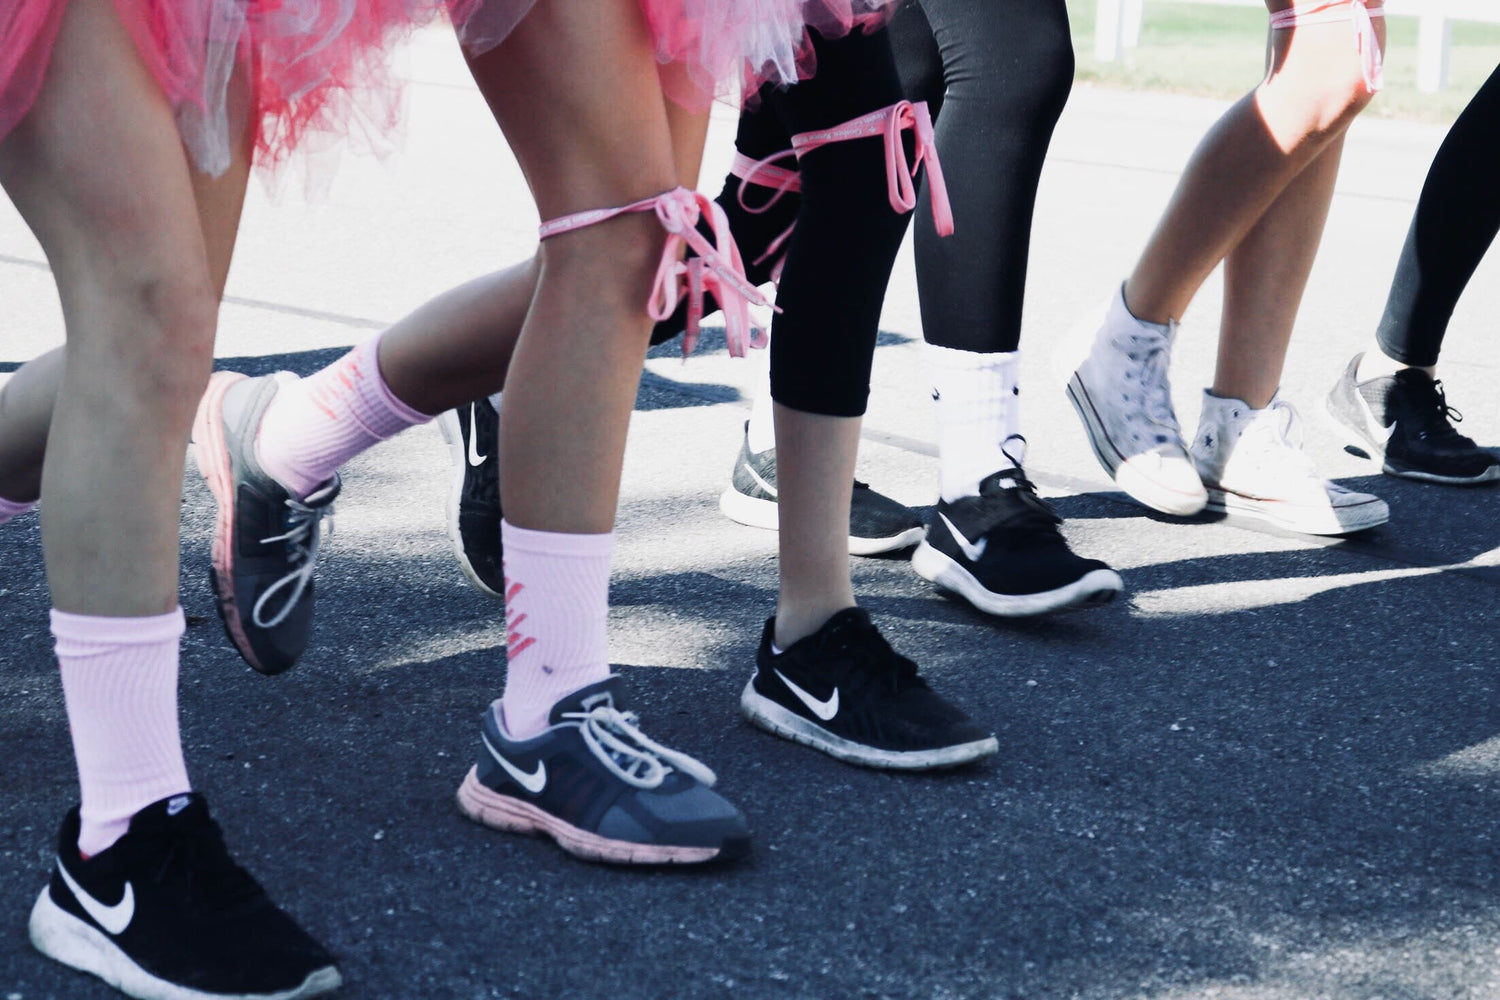 Women walking fundraiser wearing Nike athletic shoes